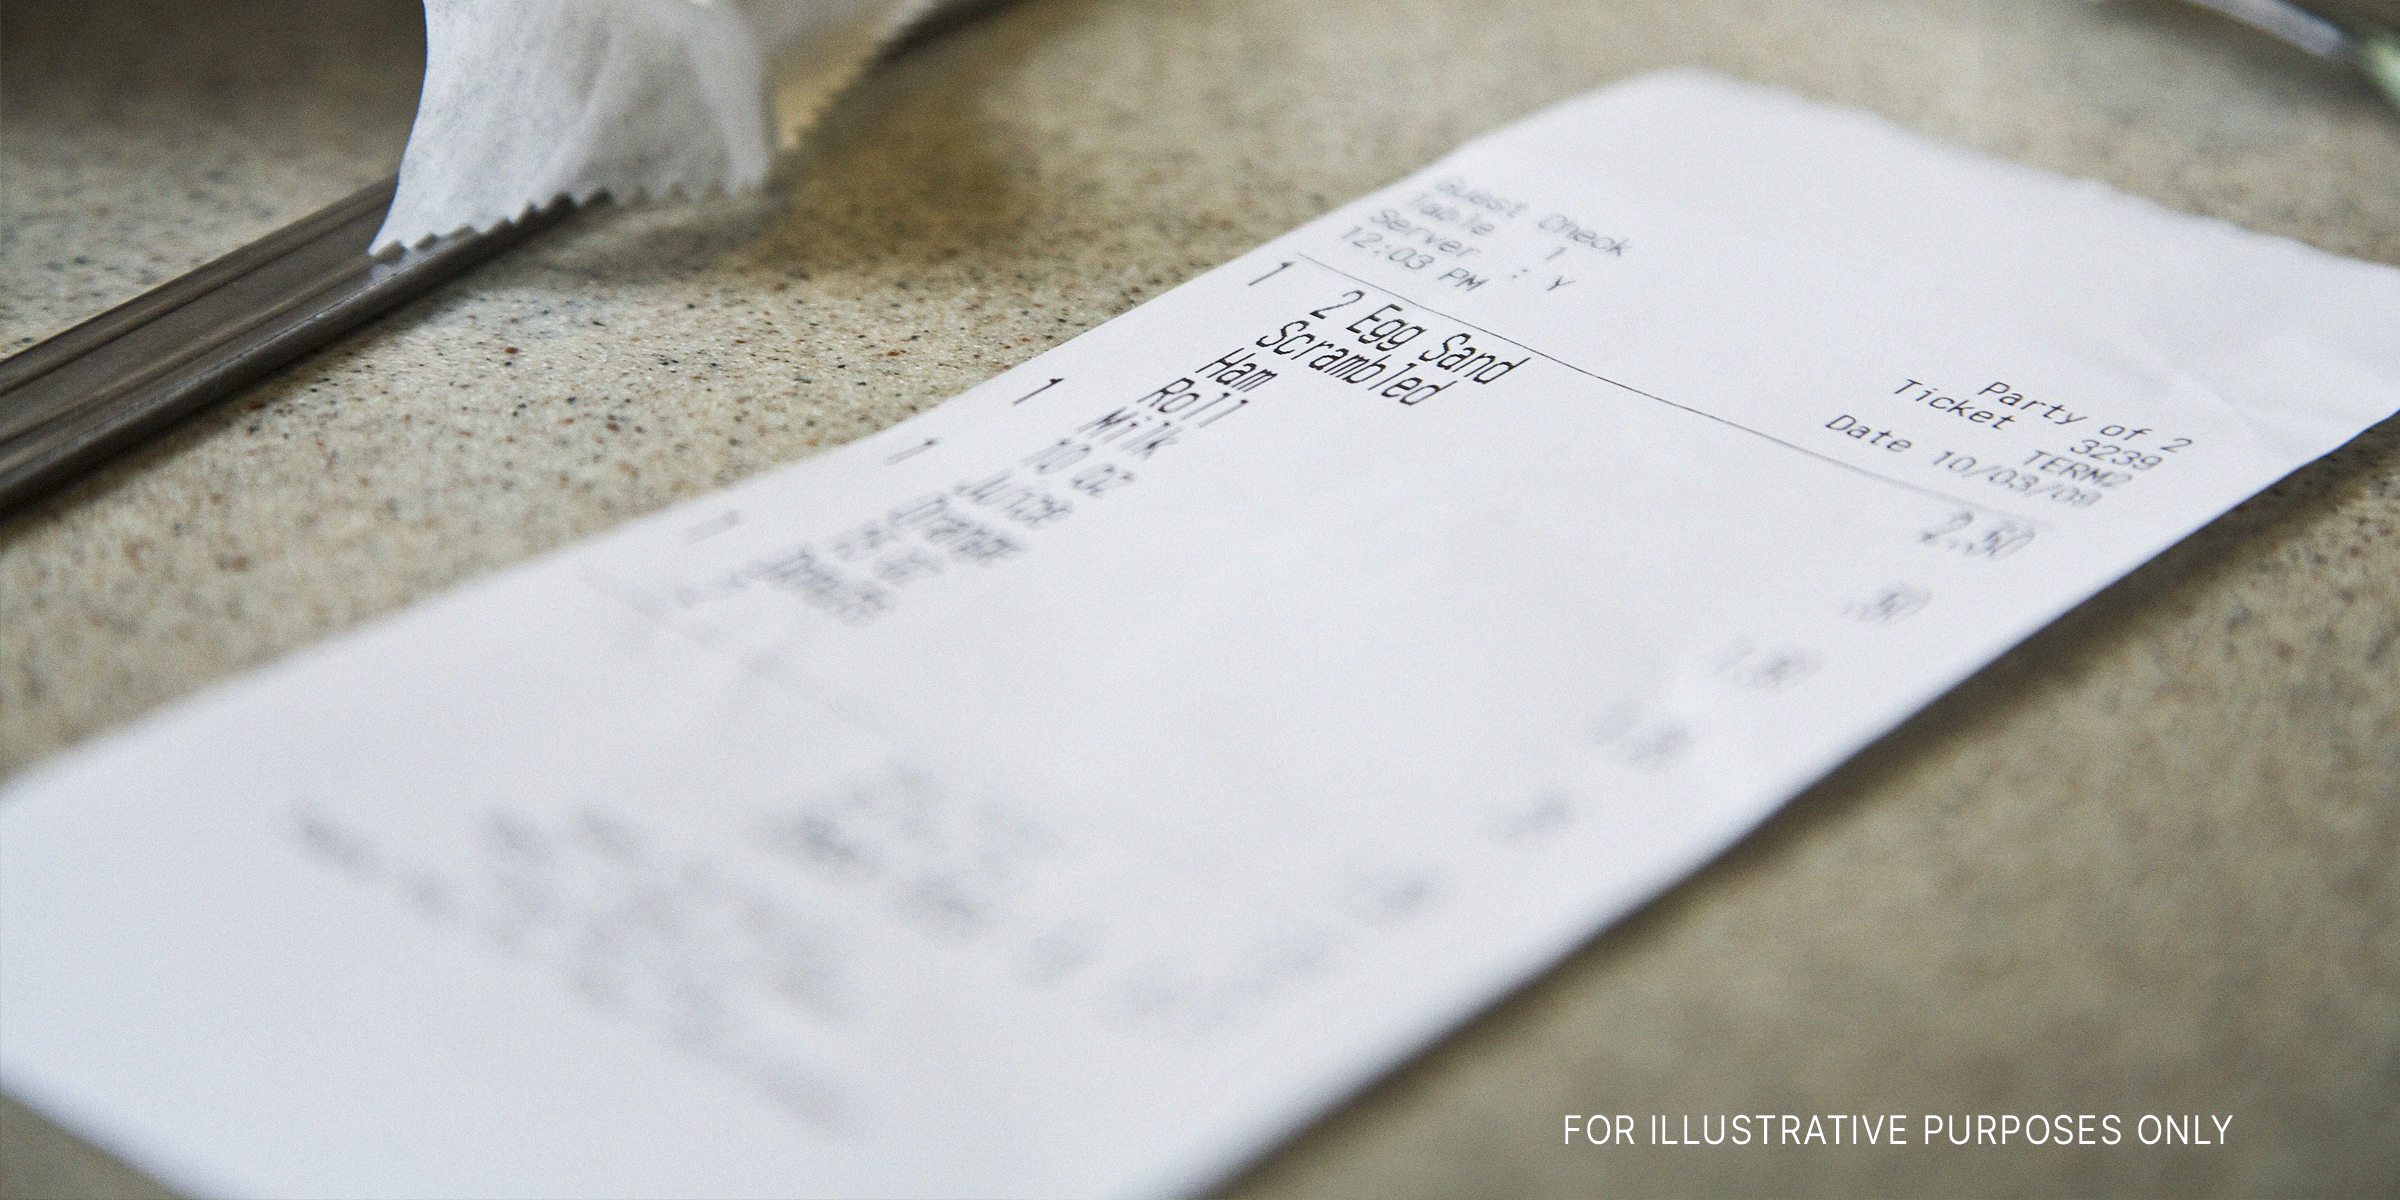 A restaurant receipt | Source: Getty Images